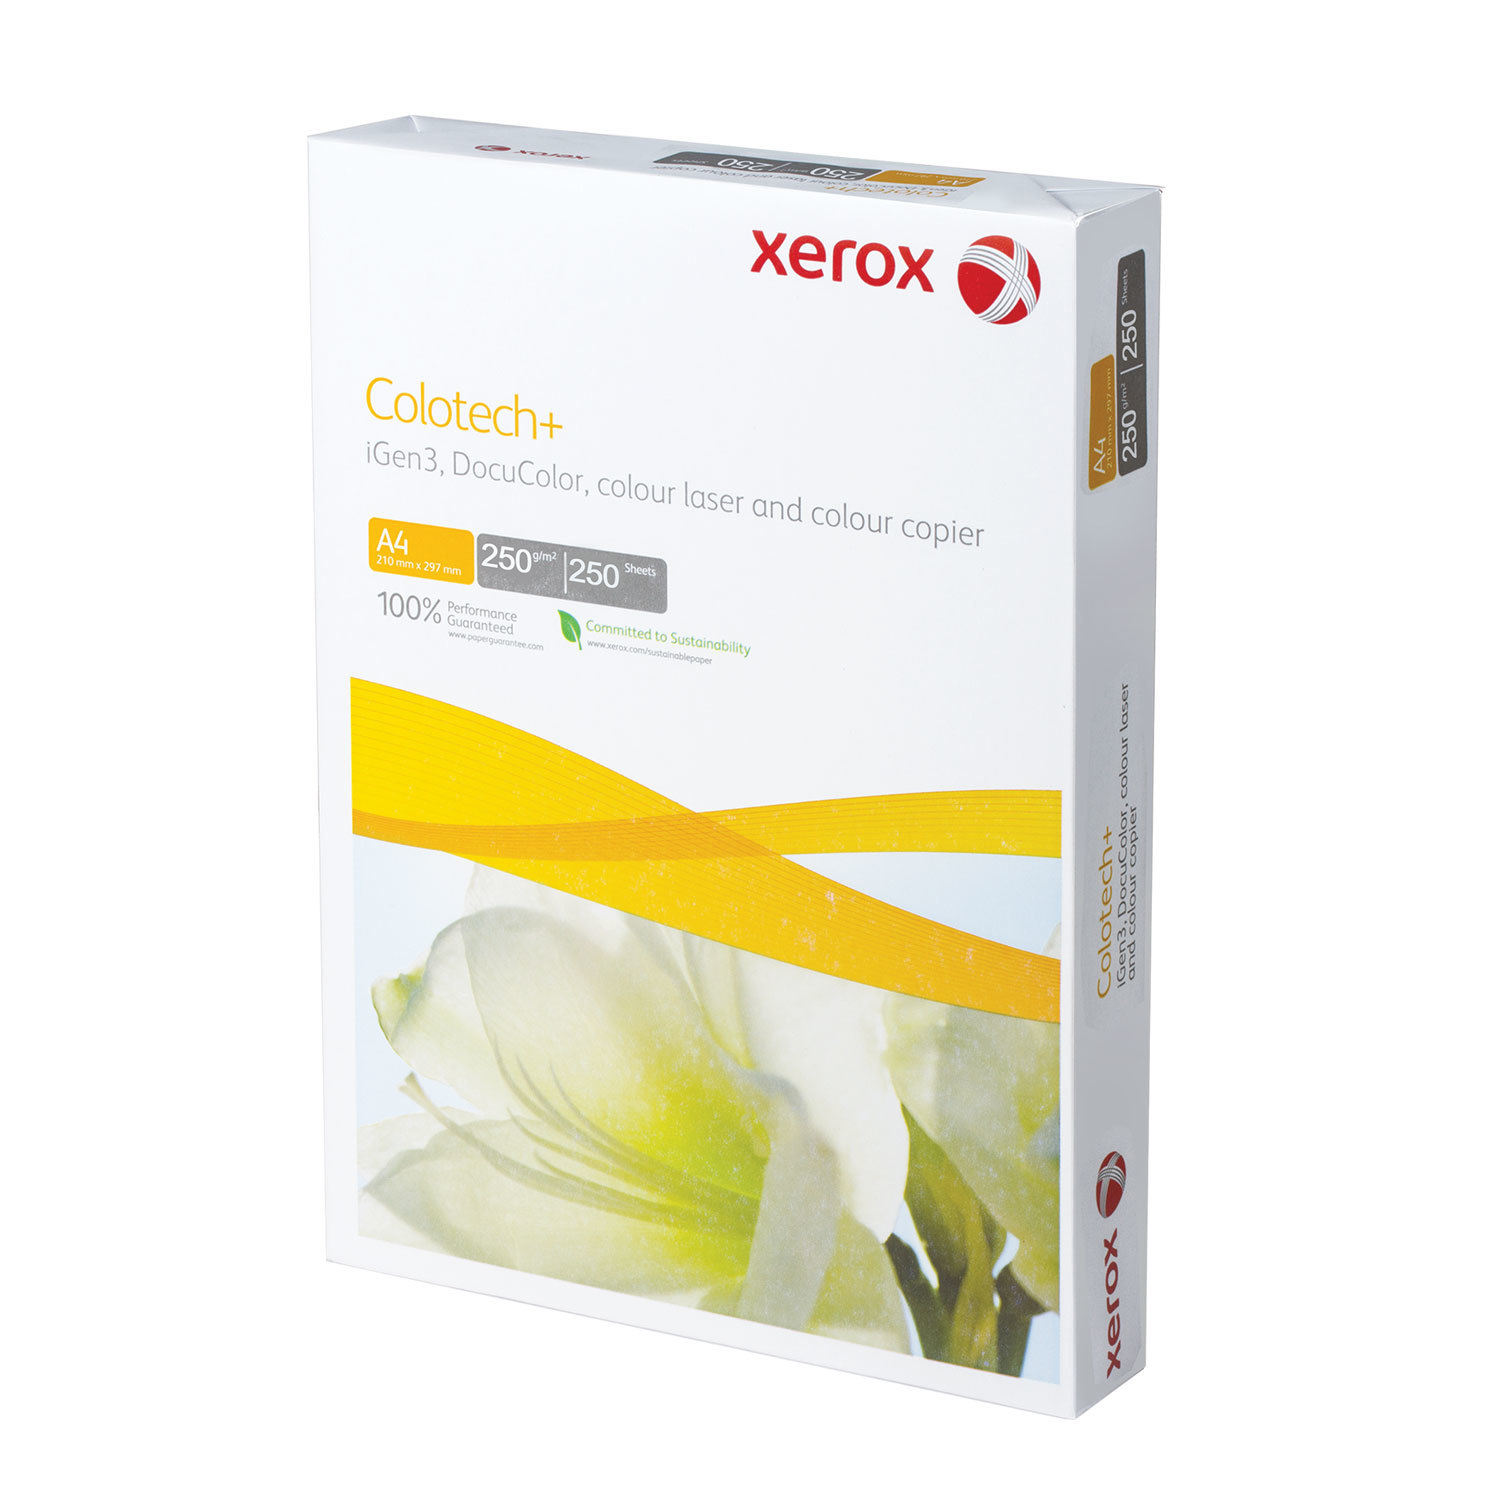 Бумага XEROX COLOTECH PLUS, А4, 250 г/м2, 250 л., для полноцветной лазерной печати, А++, Австрия, 170% (CIE), 003R98975